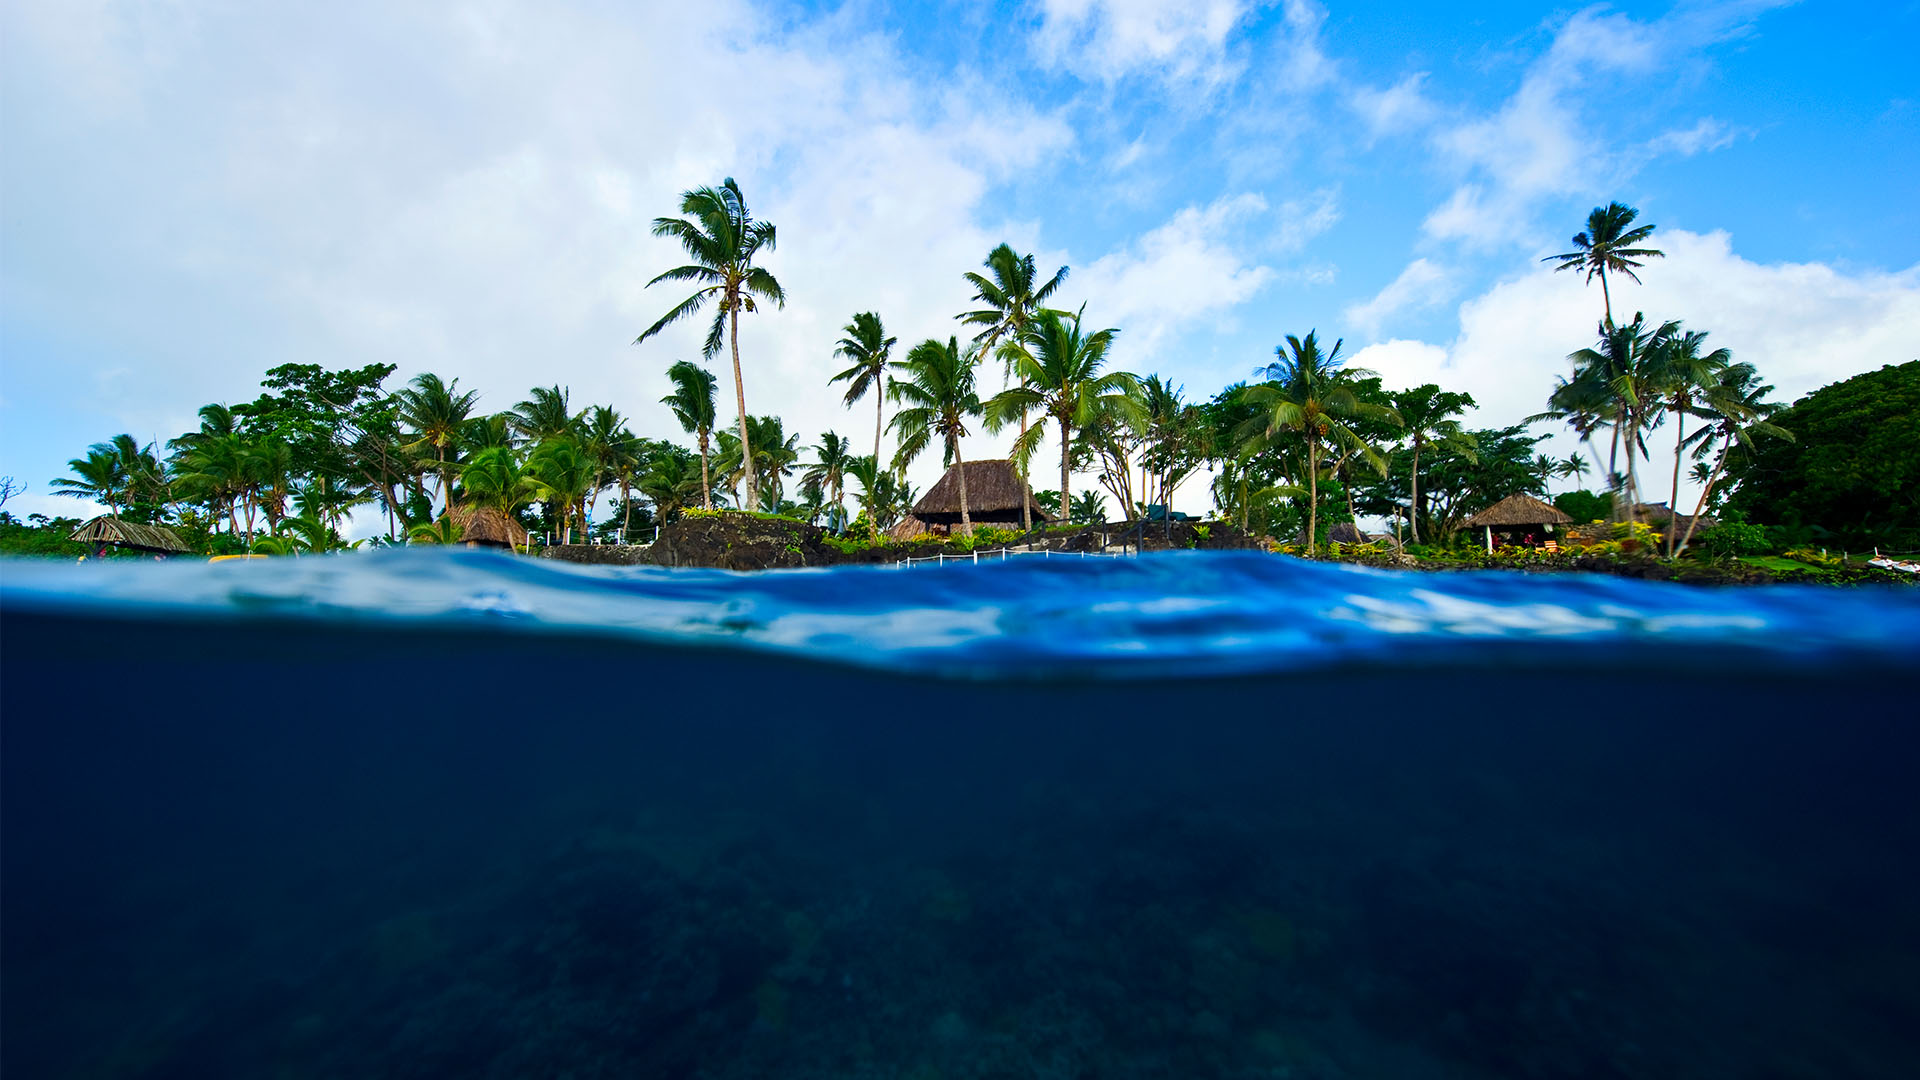 Underwater image from Fiji 